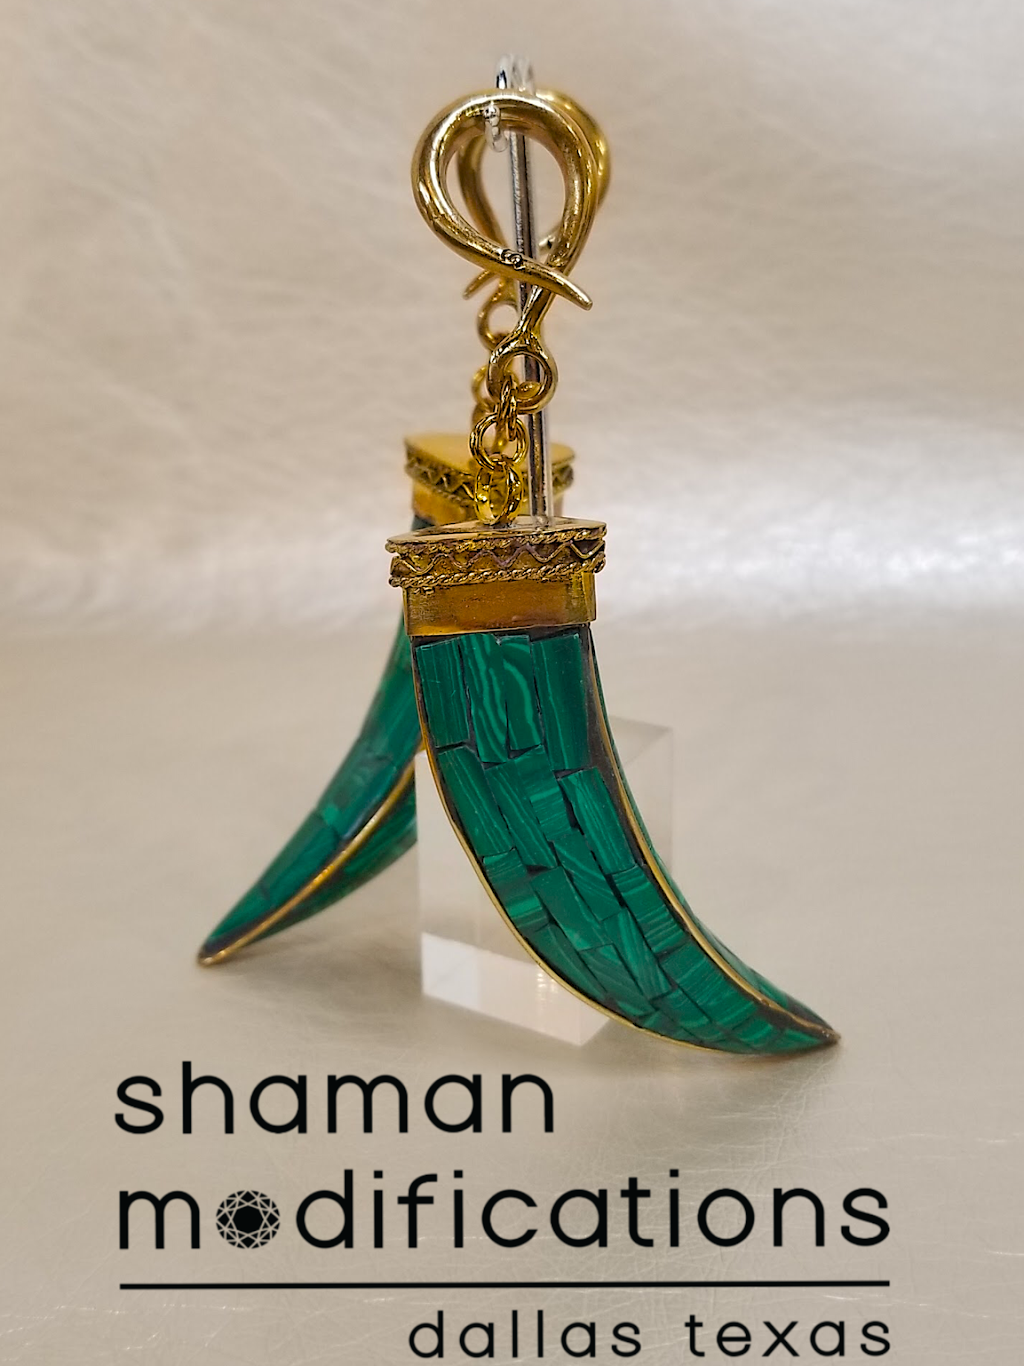 Shaman Modifications | 502 S Fitzhugh Ave, Dallas, TX 75223 | Phone: (214) 235-9473